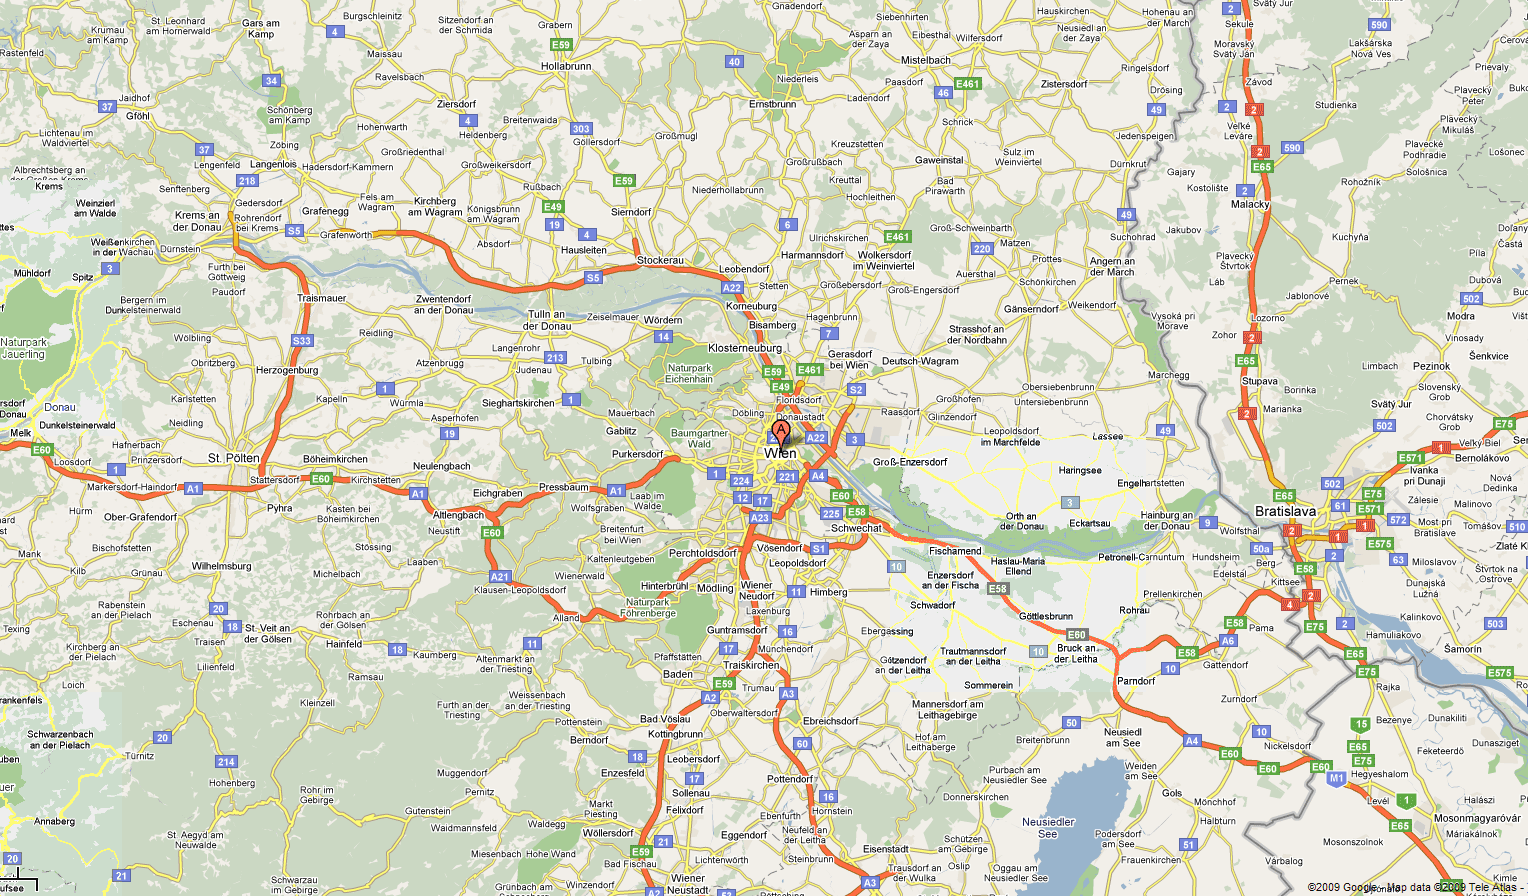 Vienna haritasi avusturya